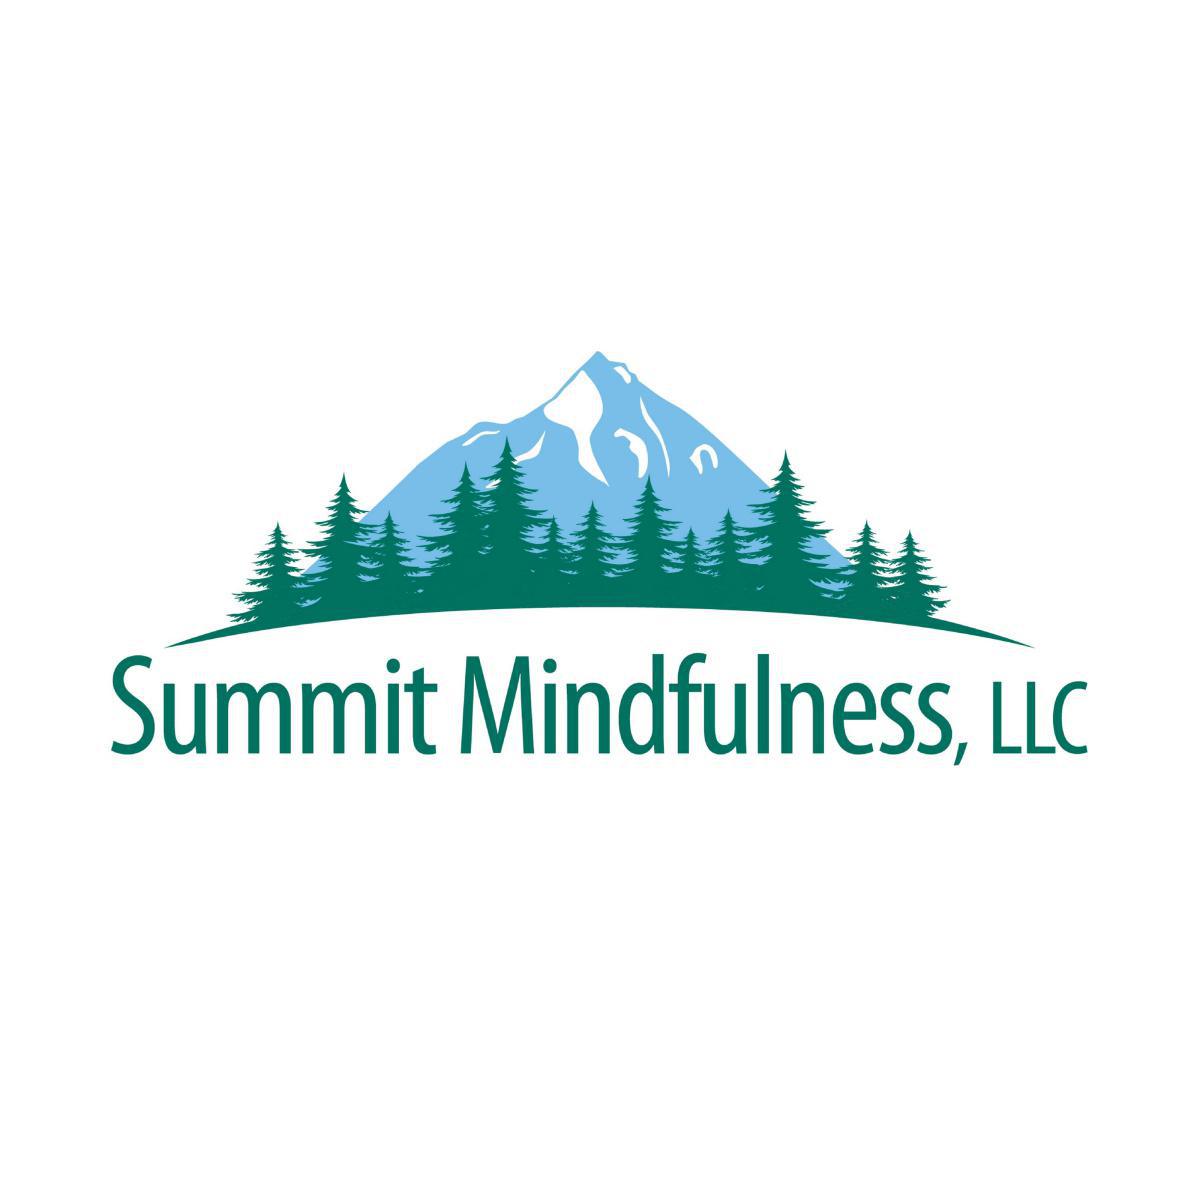 Summit Mindfulness